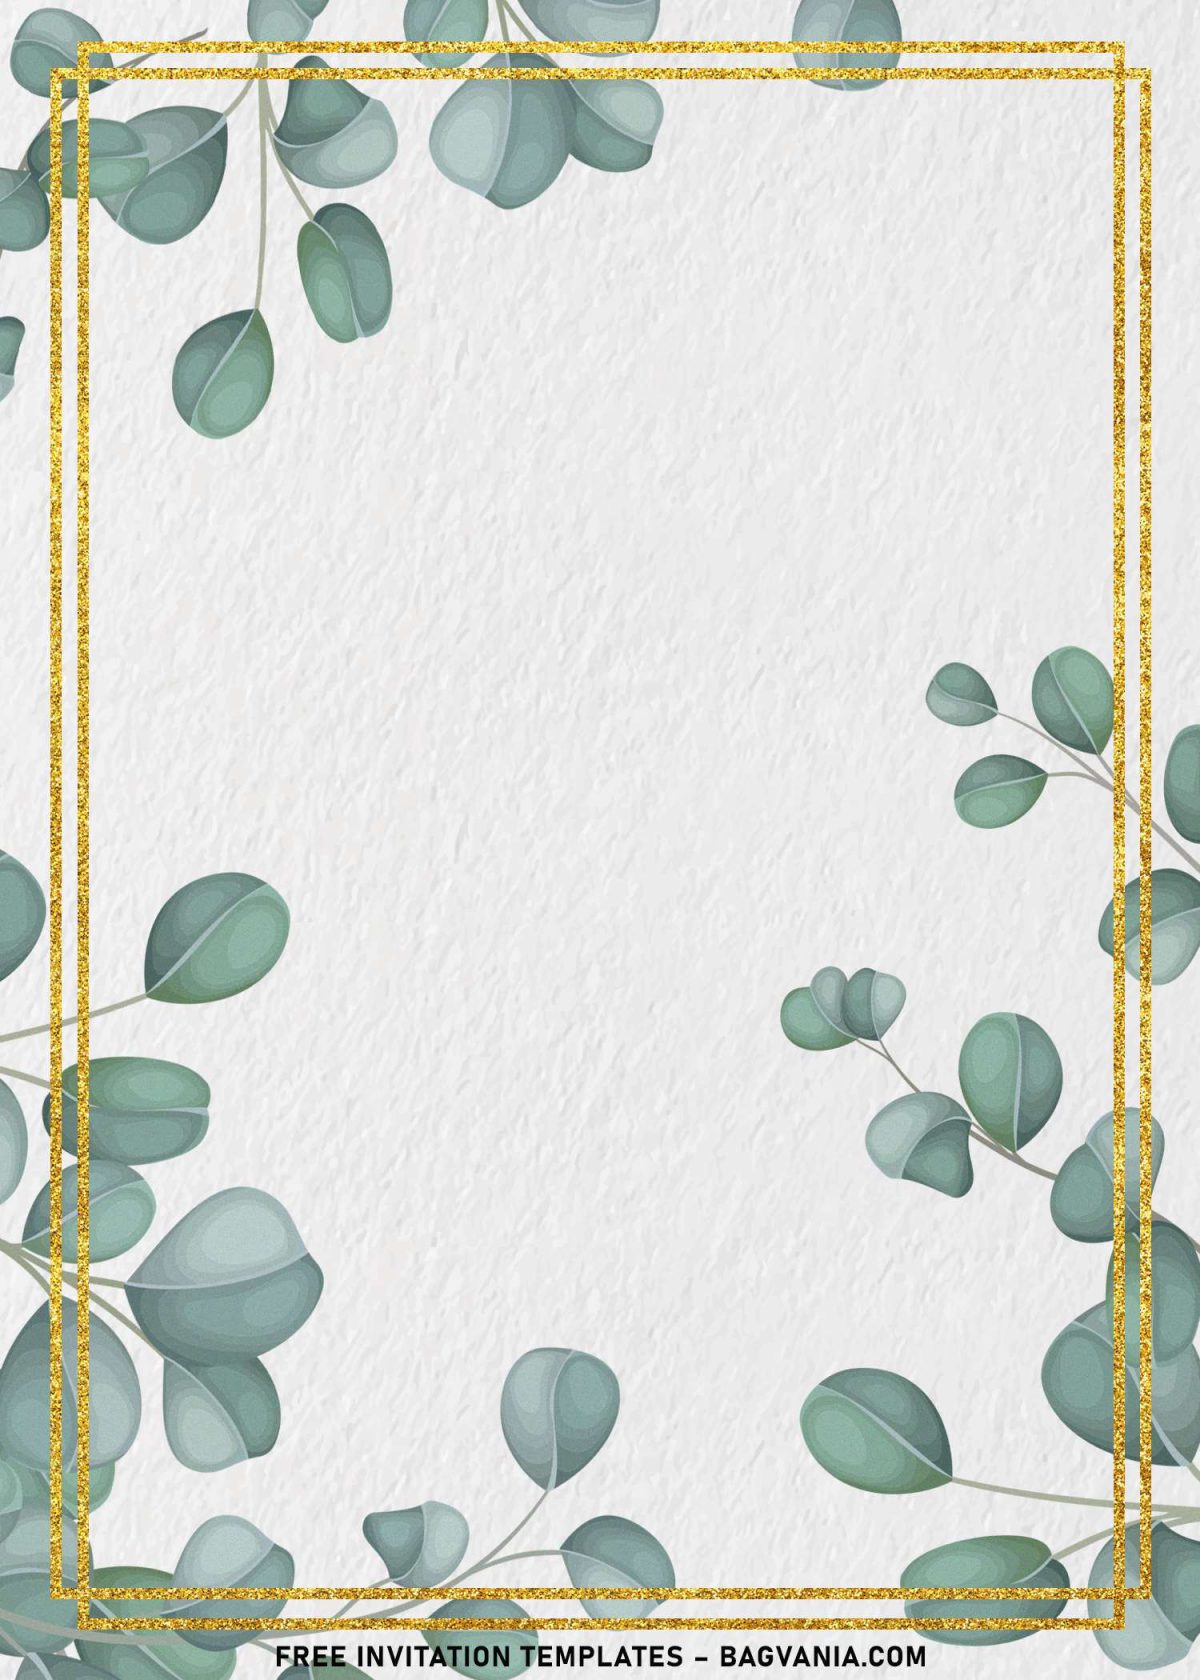 8+ Watercolor Eucalyptus Birthday Invitation Templates and has gold frame border